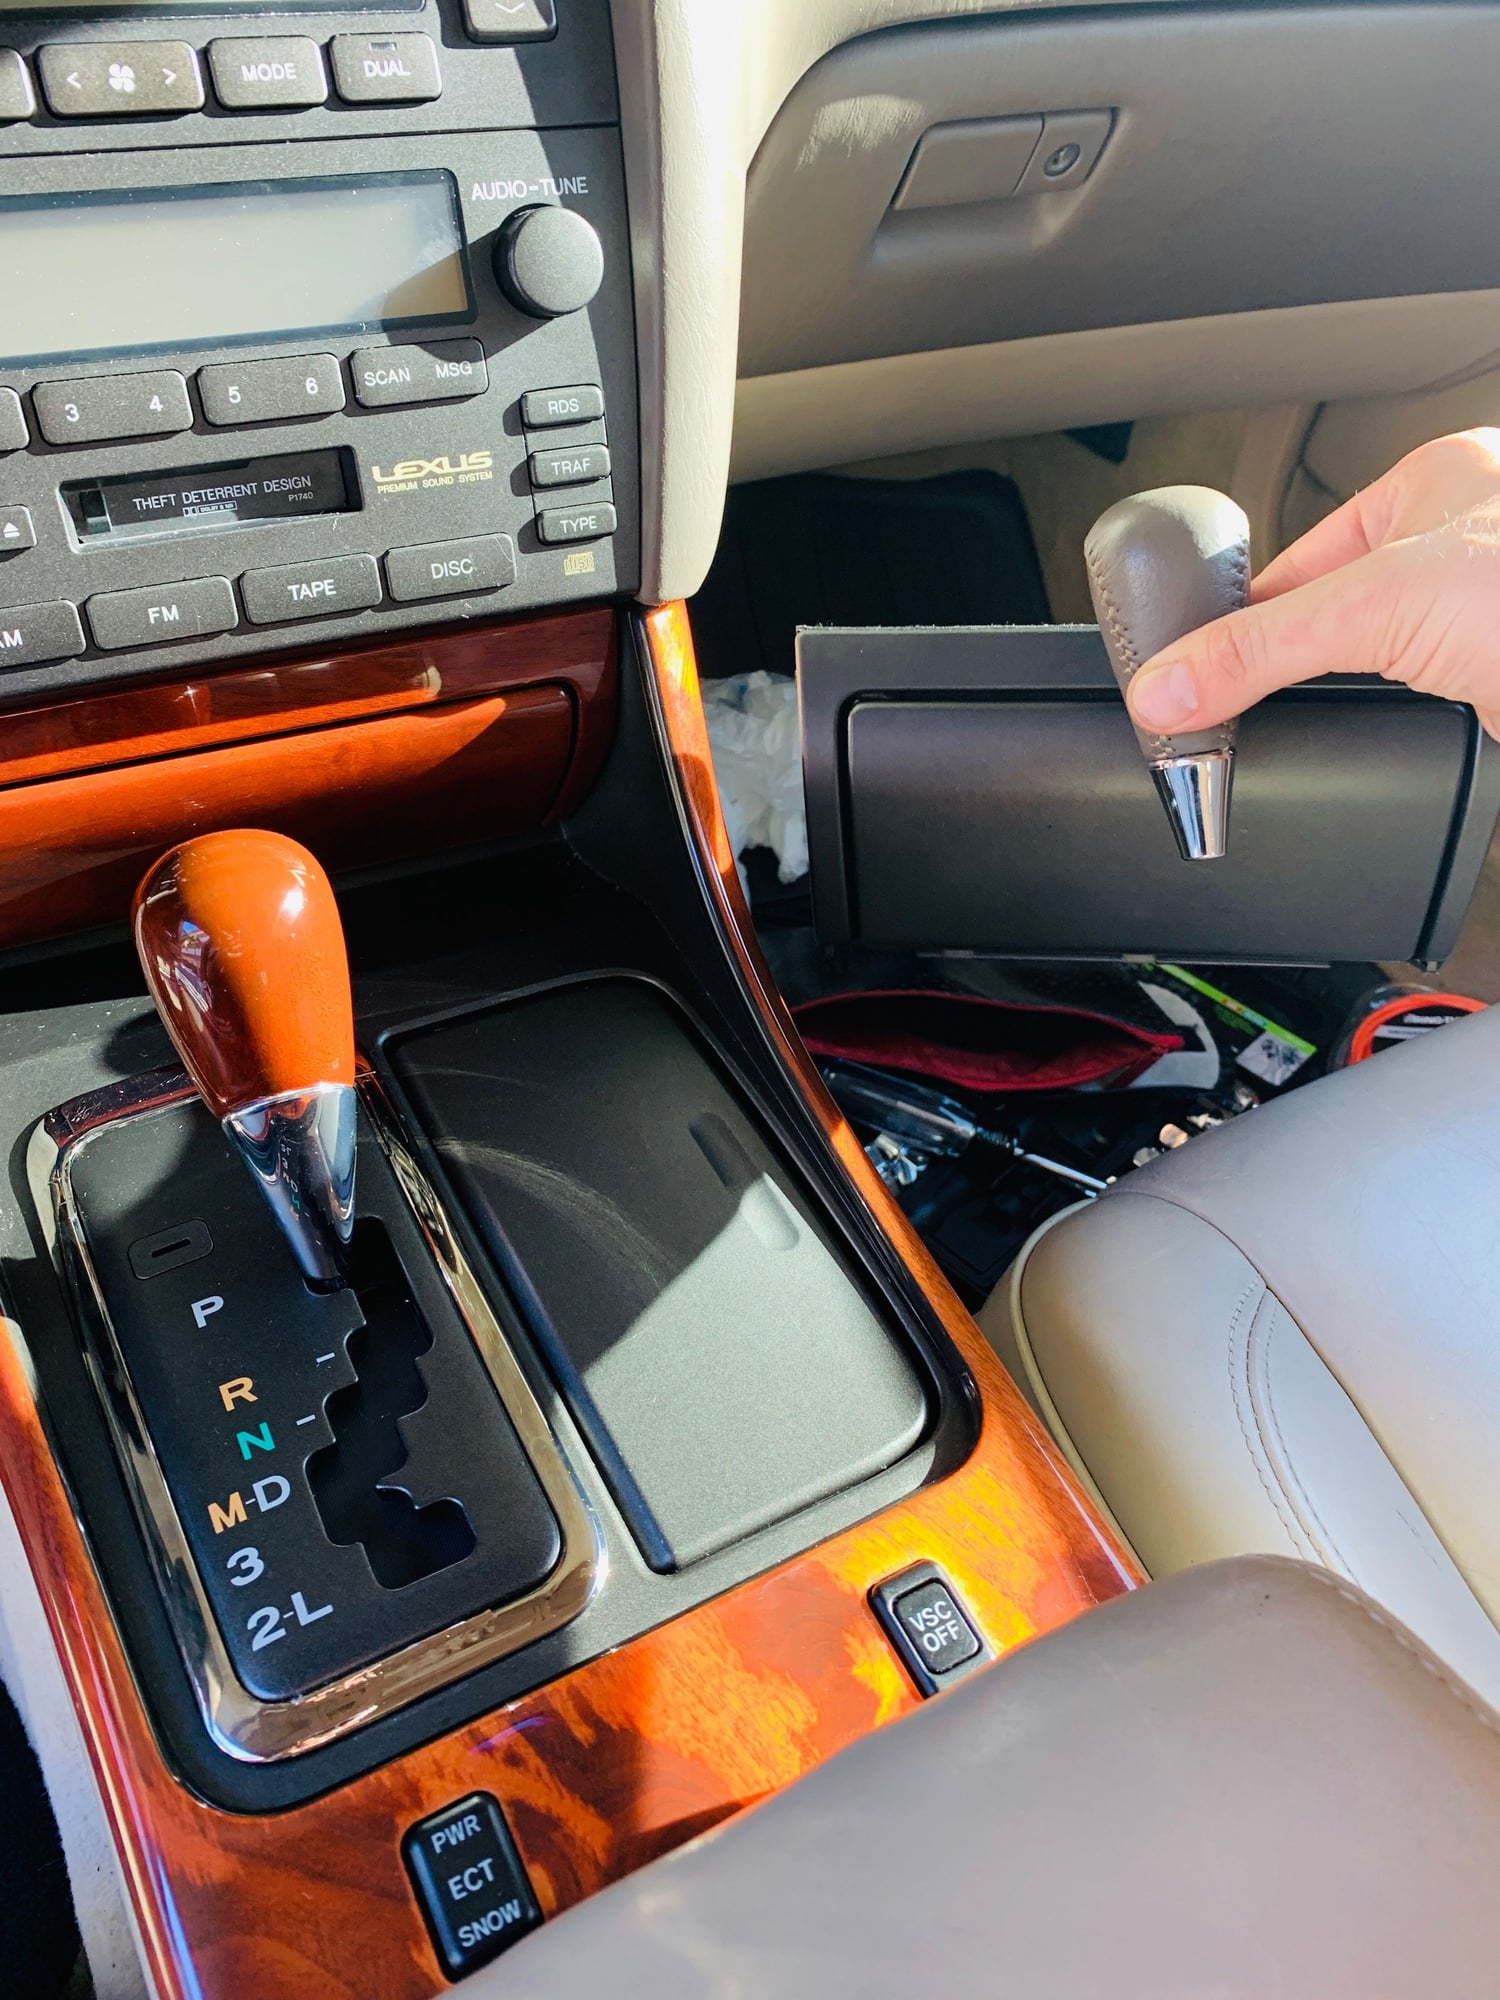 05 - 09 GTA Car Kit Bluetooth Streaming / Handsfree - ClubLexus - Lexus  Forum Discussion